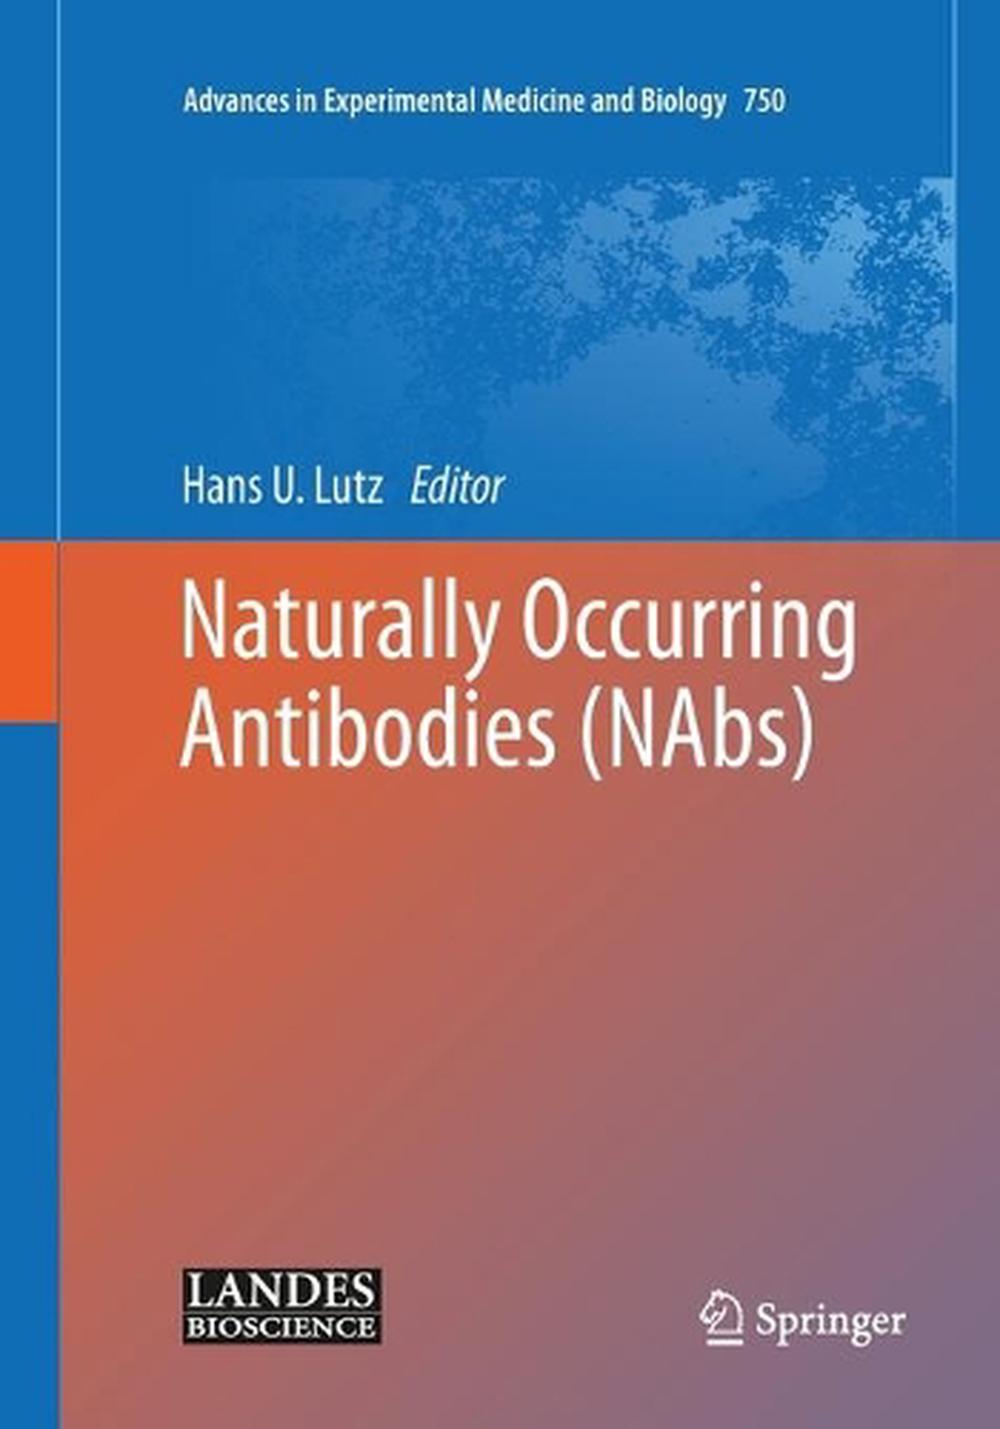 Naturally Occurring Antibodies (NAbs) (English) Paperback Book Free Shipping! 9781493953318 eBay